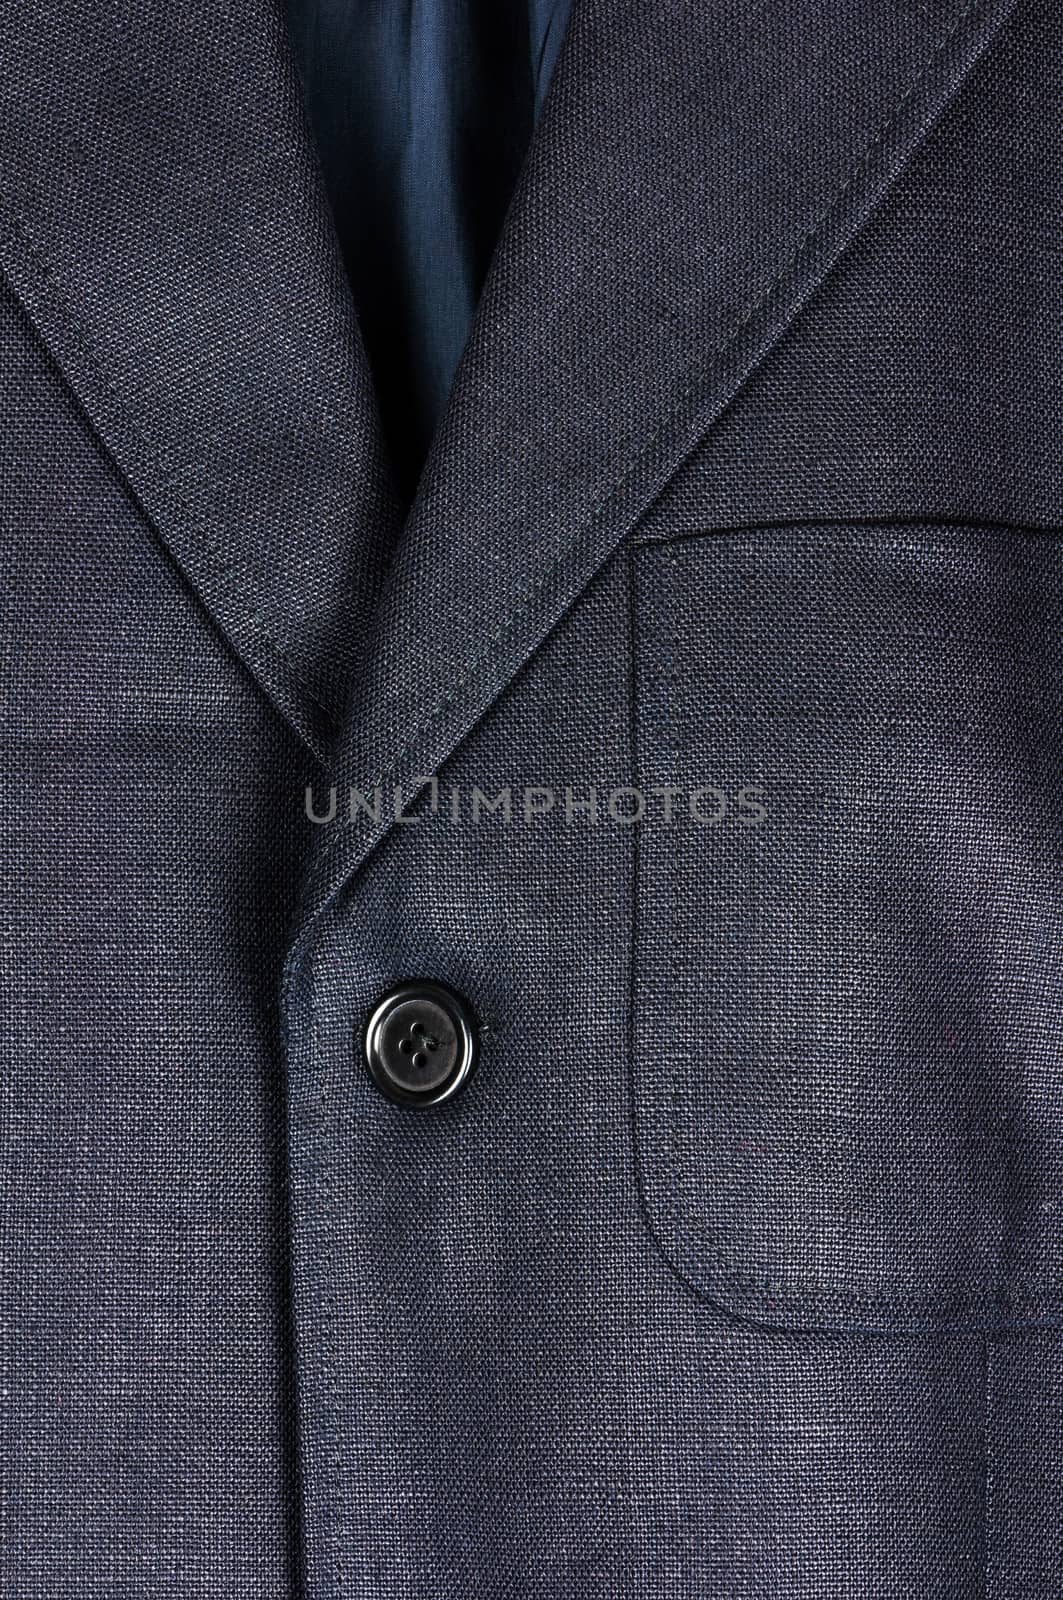 Blue linen jacket detail